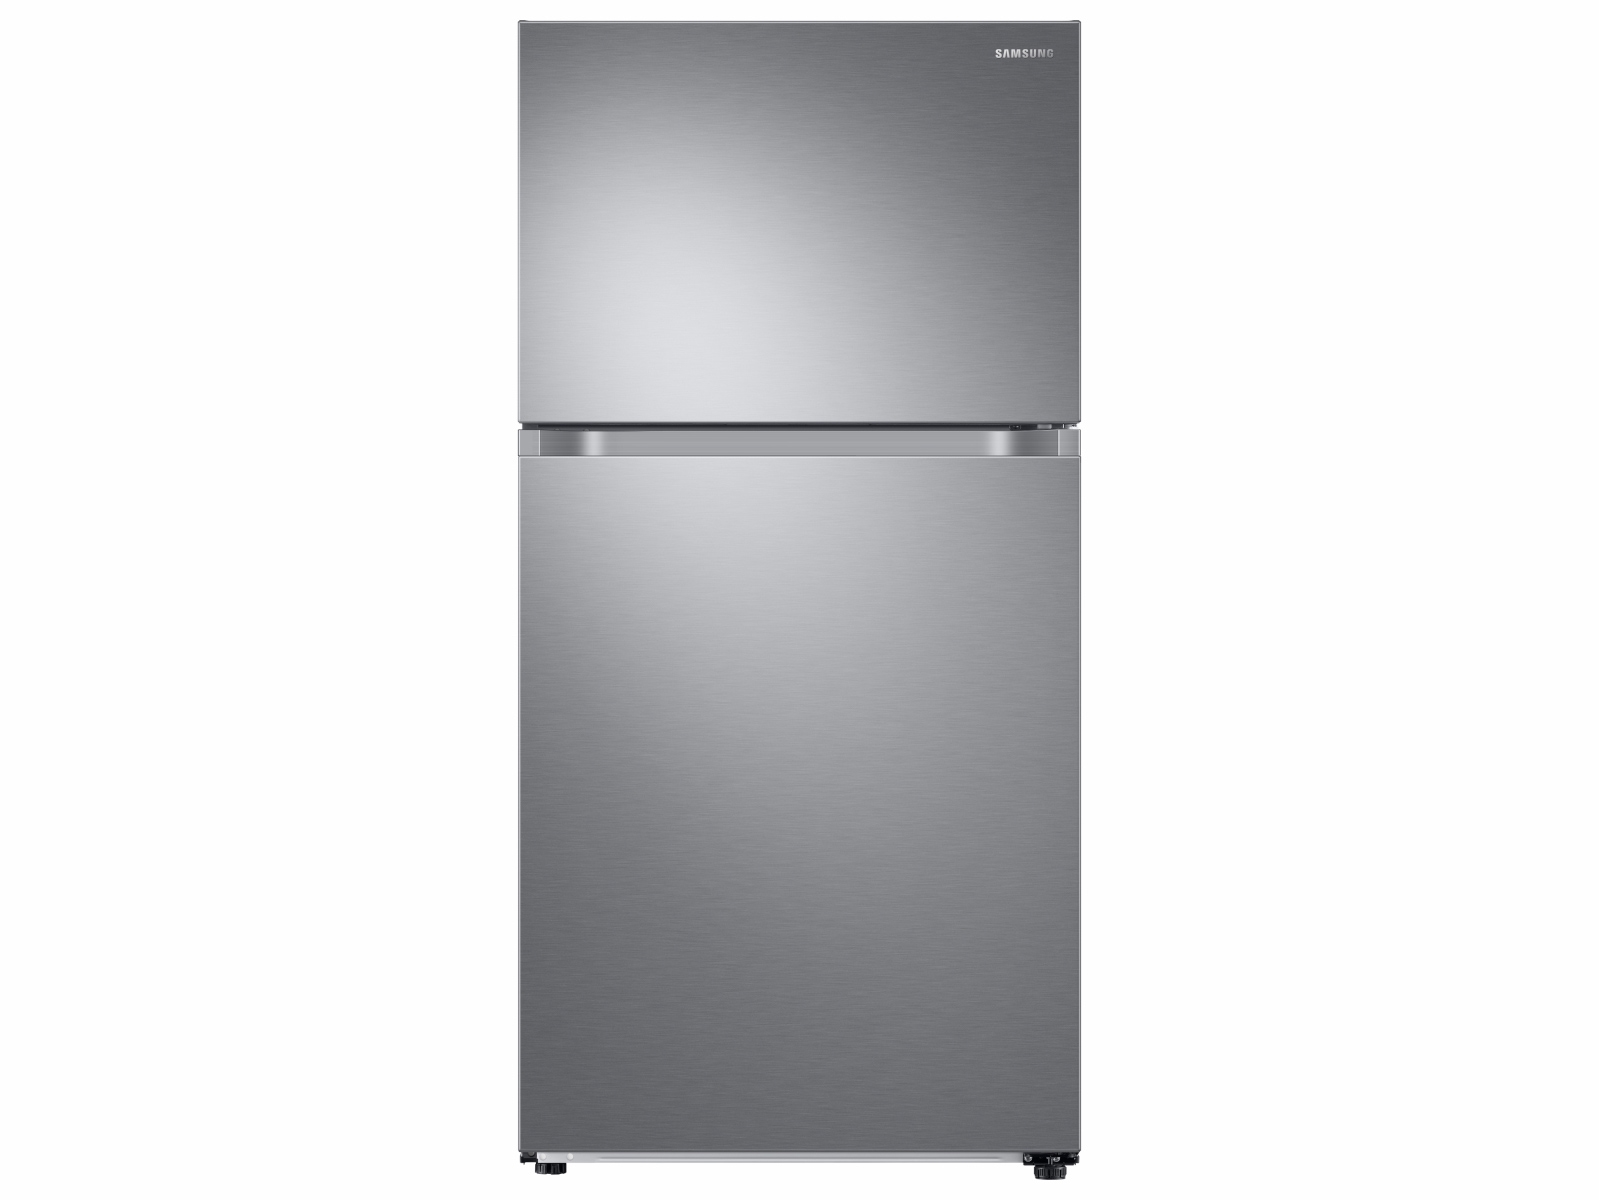 Photos - Fridge Samsung 21 cu. ft. Top Freezer Refrigerator with FlexZone™ and Ice Maker i 